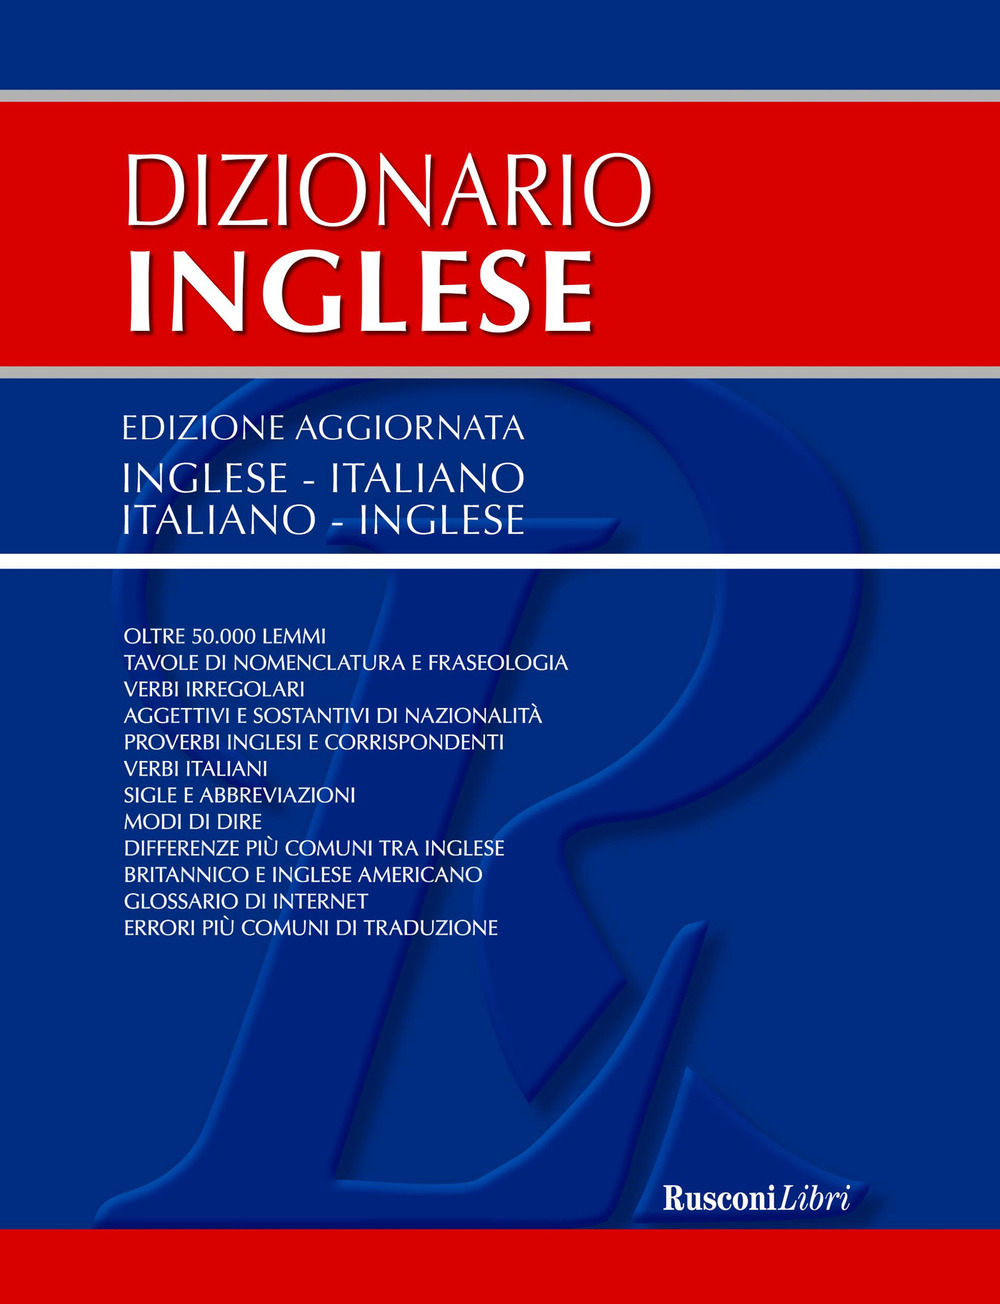 Image of Dizionario inglese